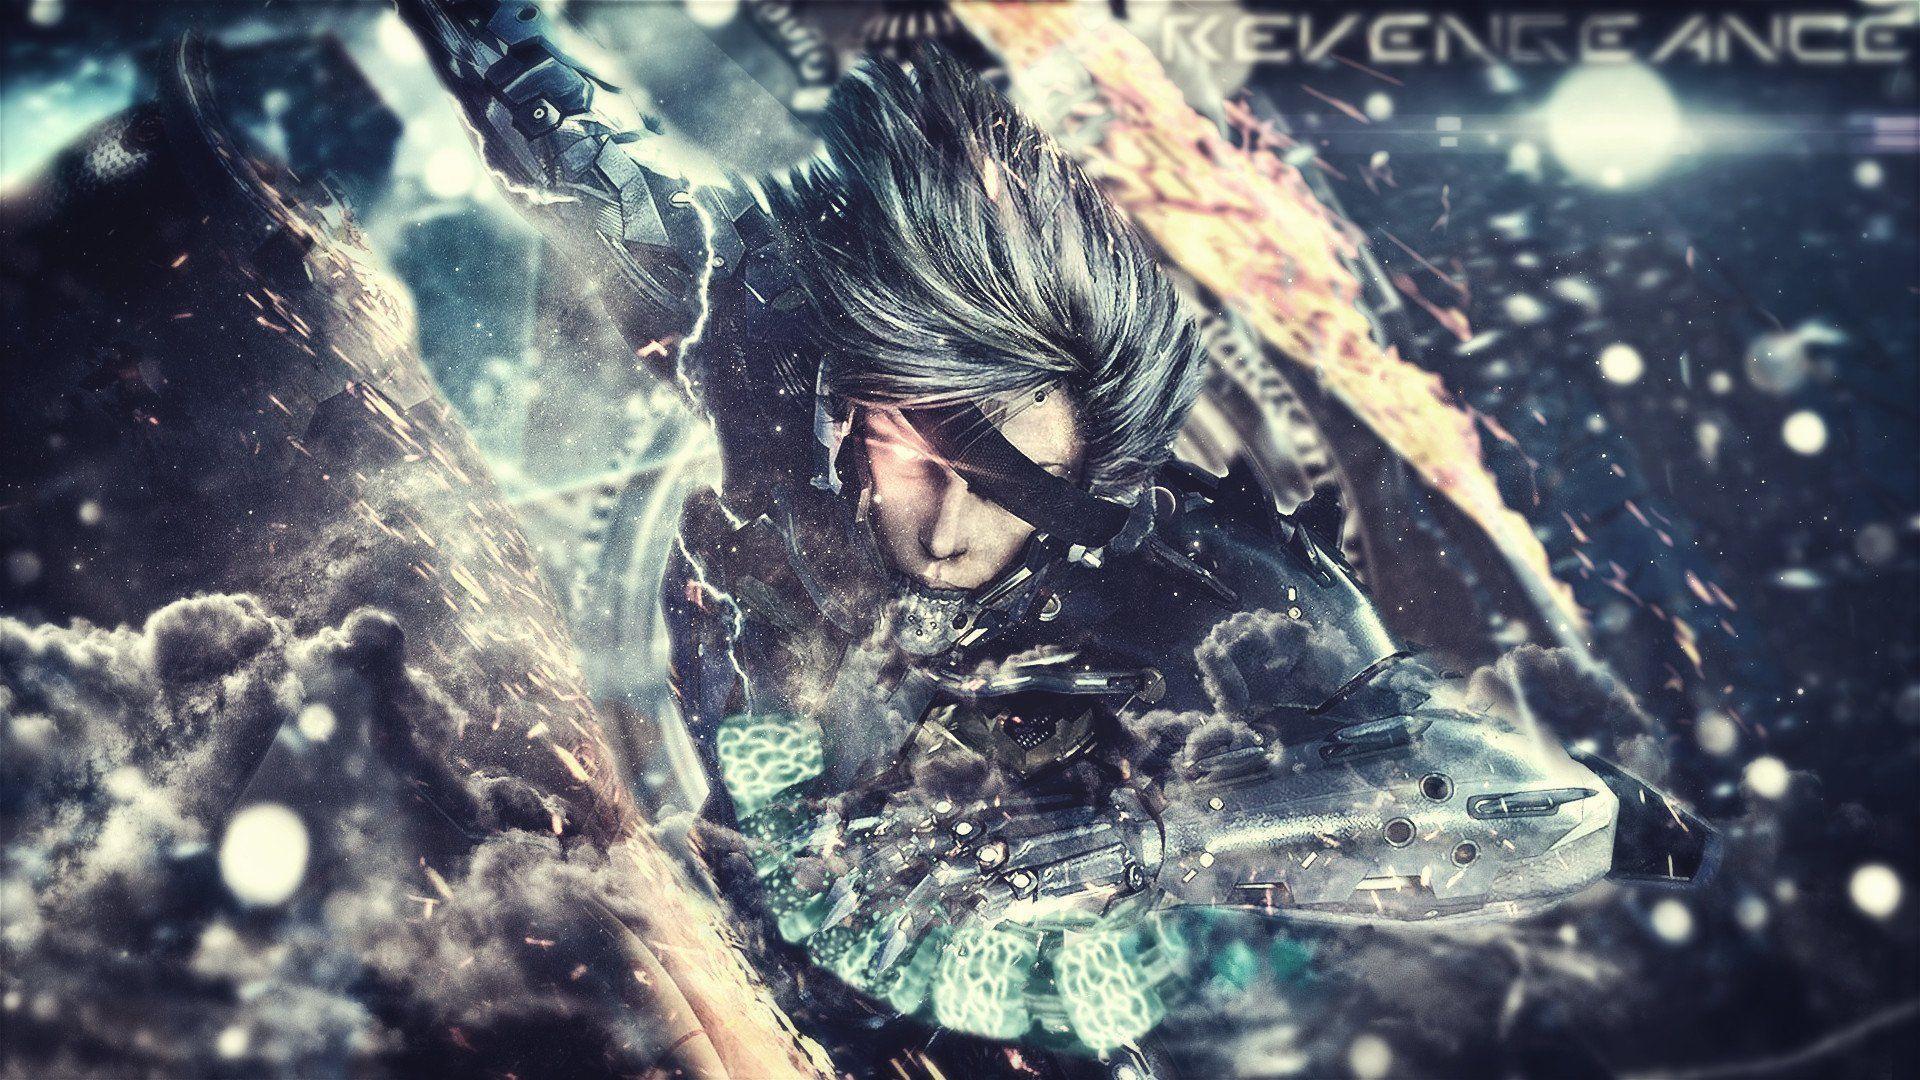 Metal Gear Rising: Revengeance Full HD Wallpaper and Background